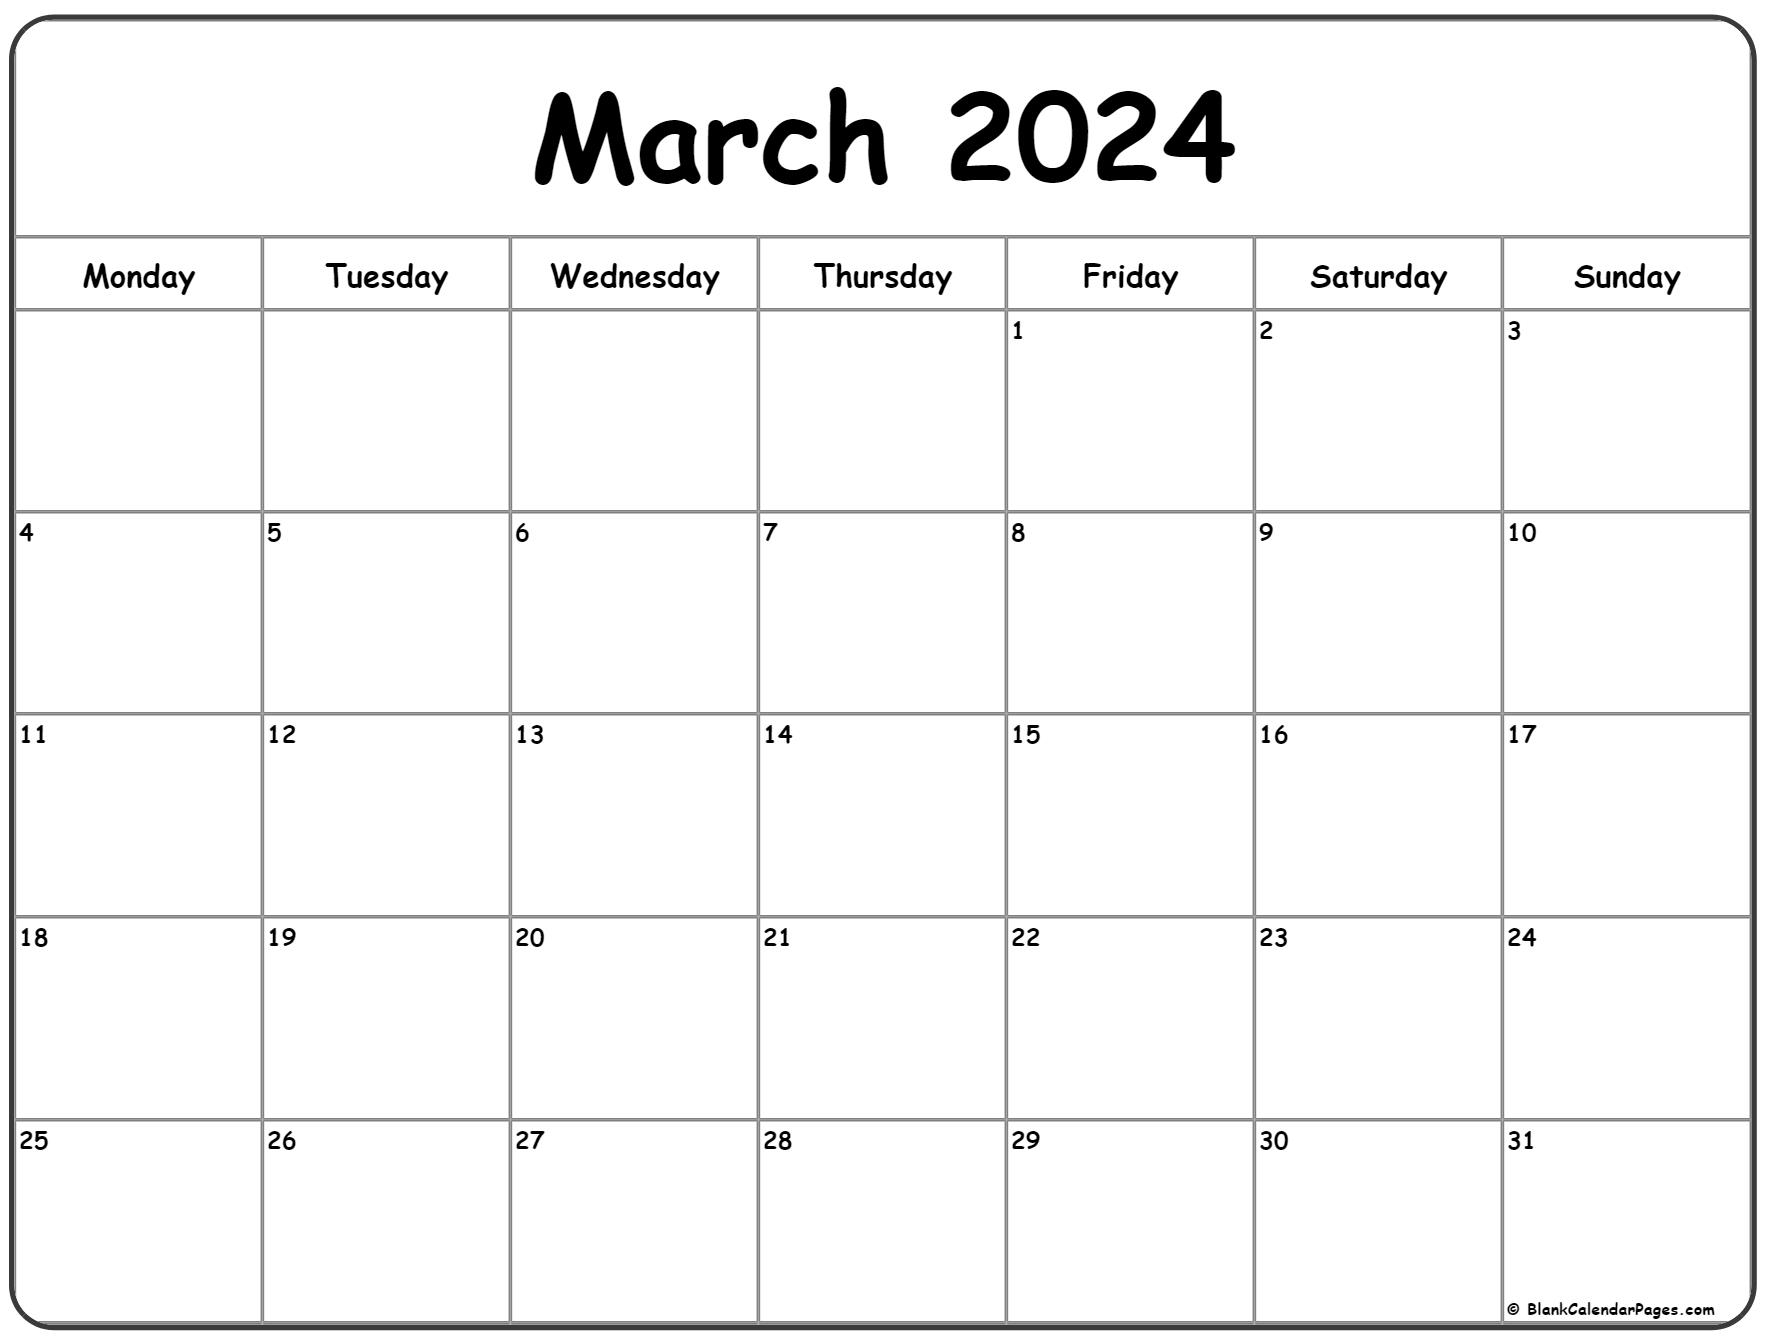 March 2024 Monday Calendar | Monday To Sunday for 2024 March Calendar Free Printable